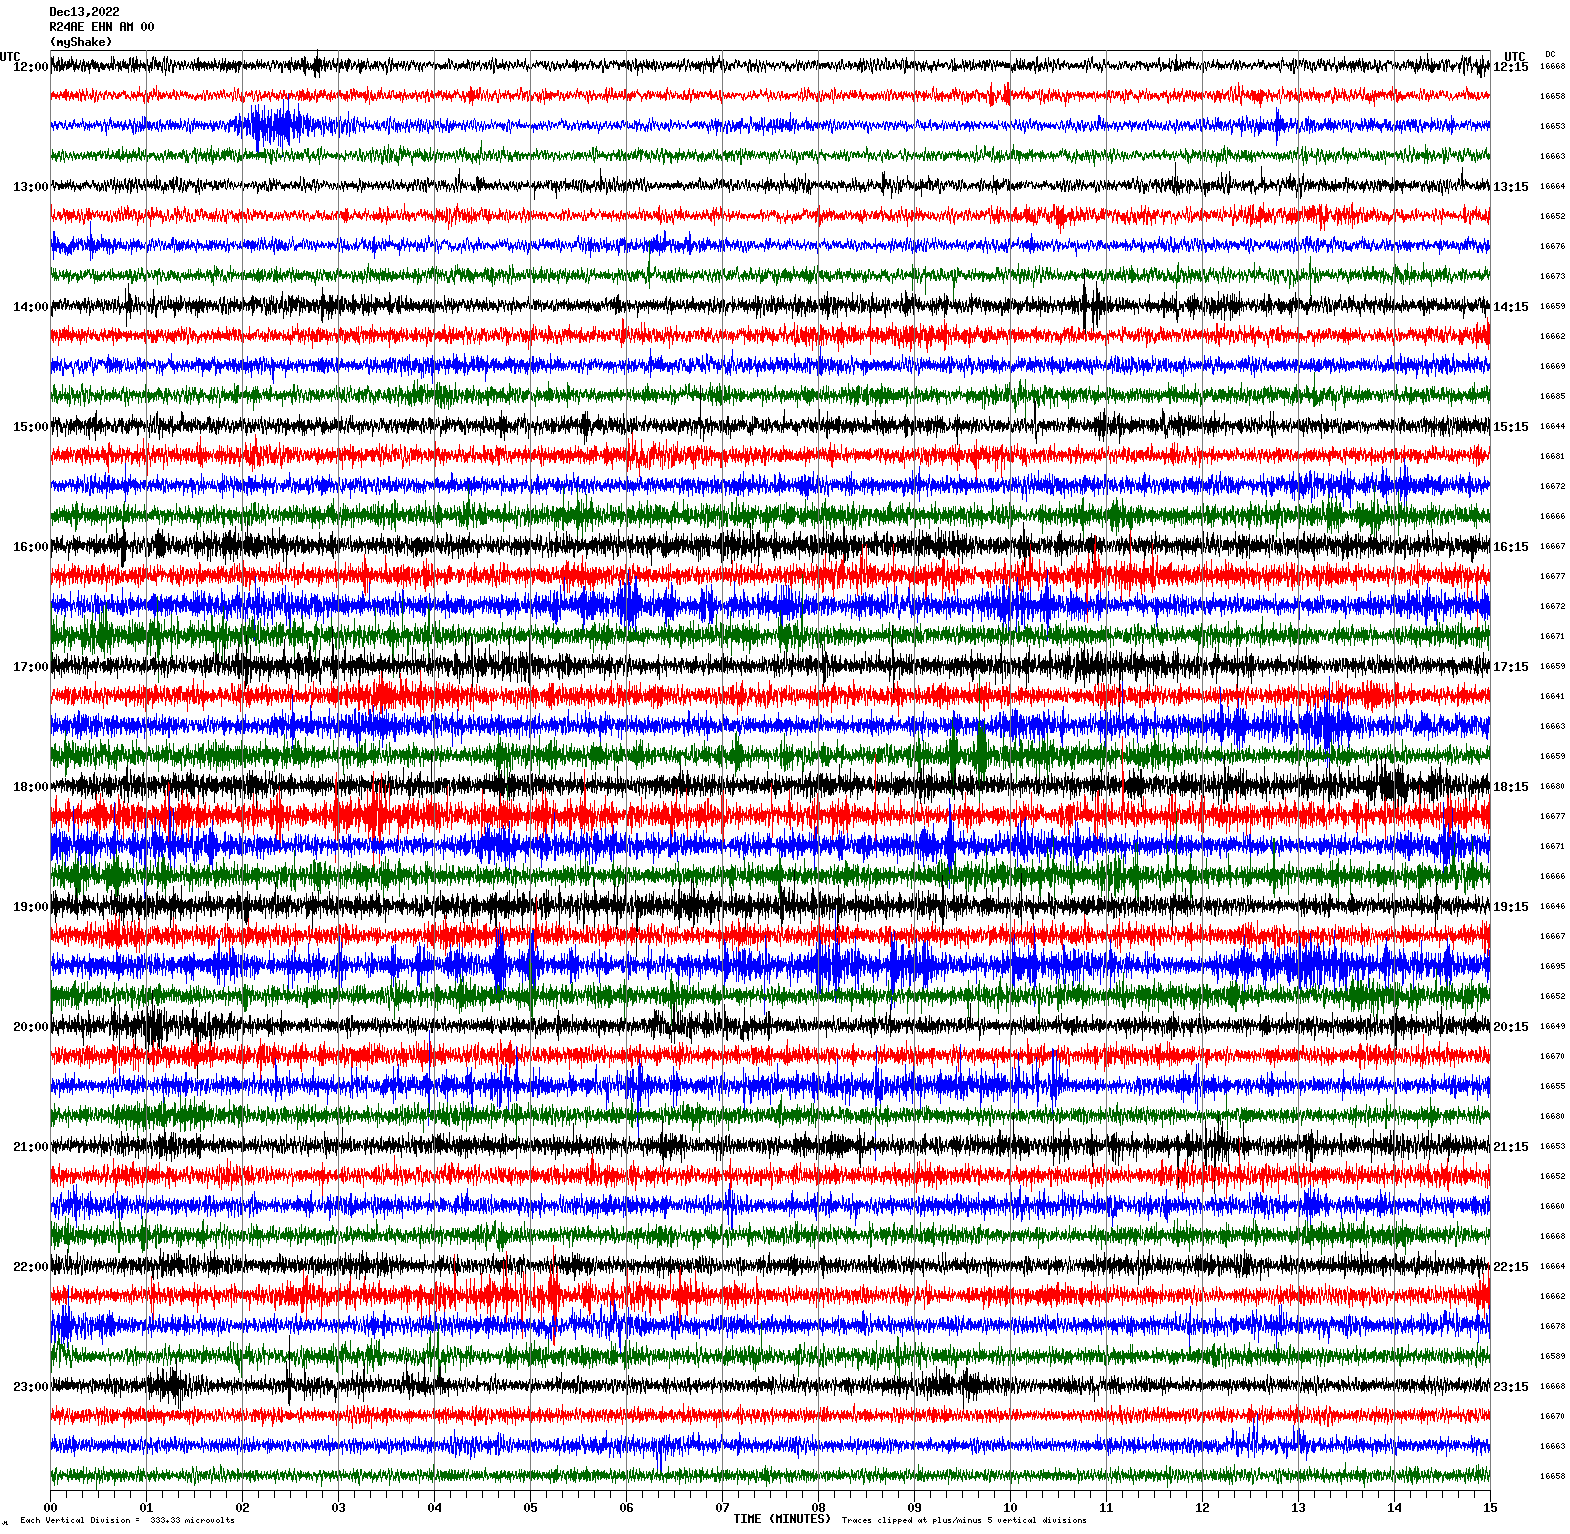 /seismic-data/R24AE/R24AE_EHN_AM_00.2022121312.gif